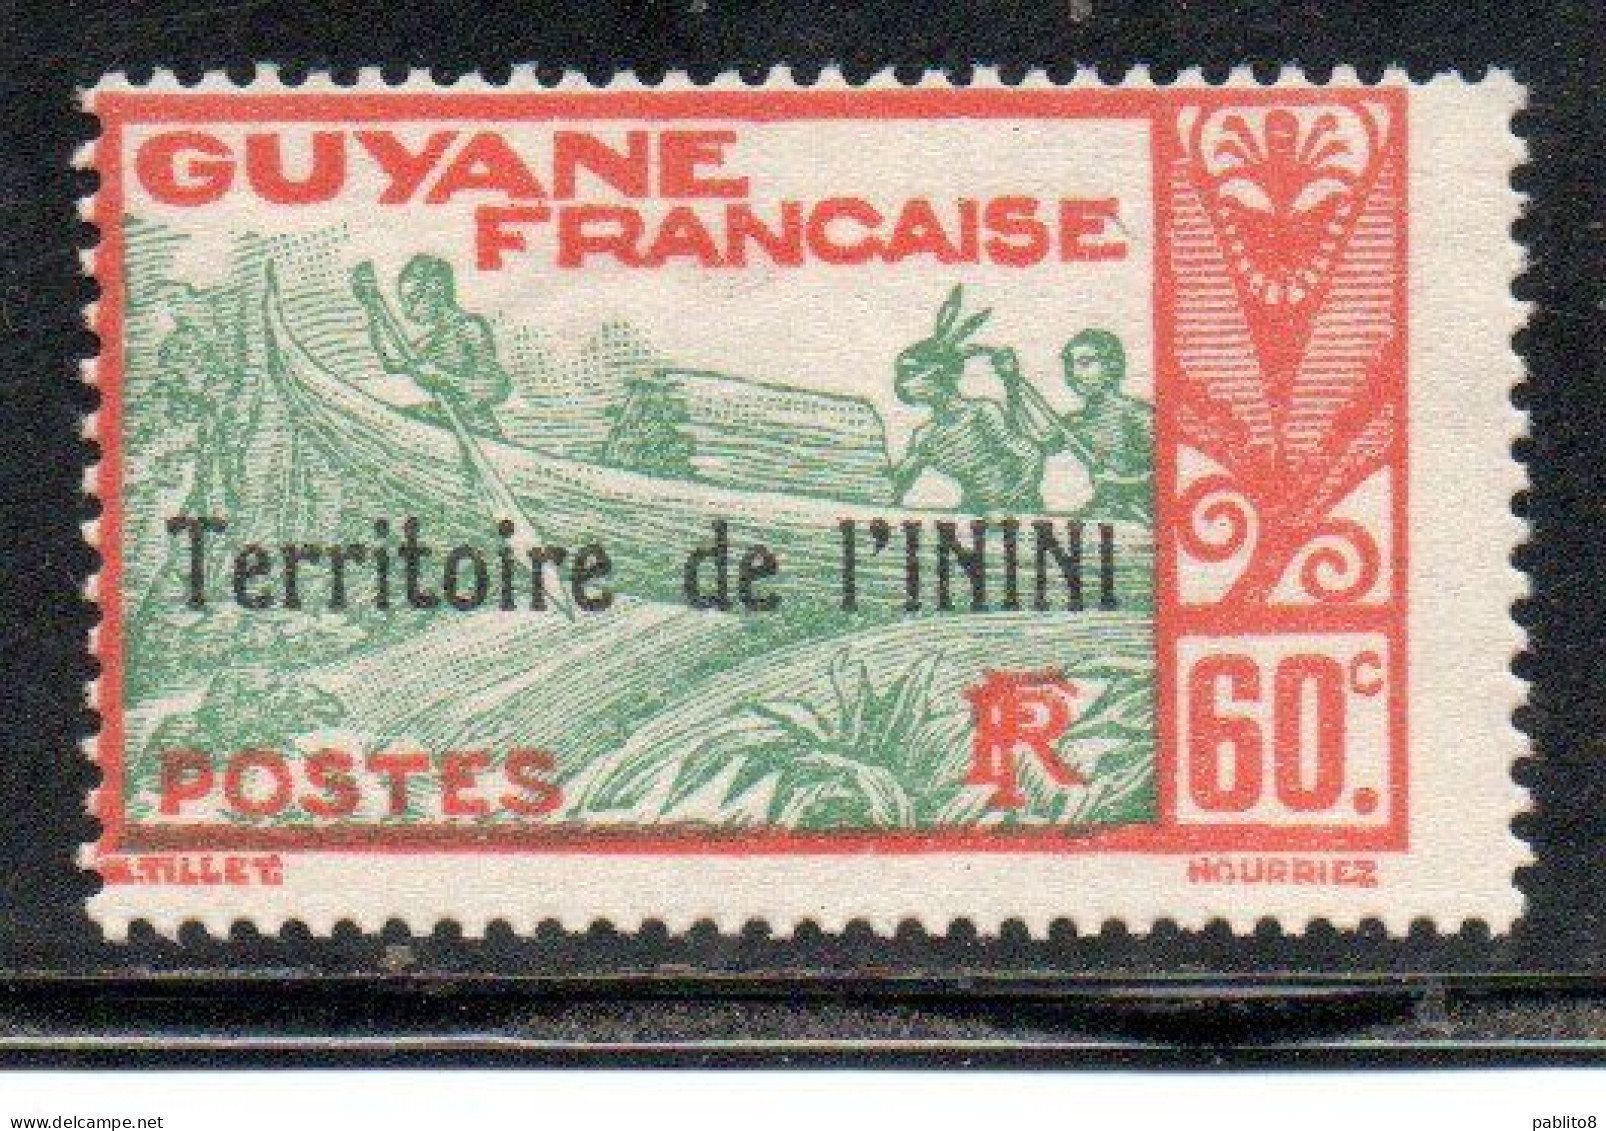 GUYANE FRANCAISE TERRITOIRE DE L'ININI OVERPRINTED SURCHARGE 1932 1940 SHOOTING RAPIDS MARONI RIVER 60c MNH - Ungebraucht